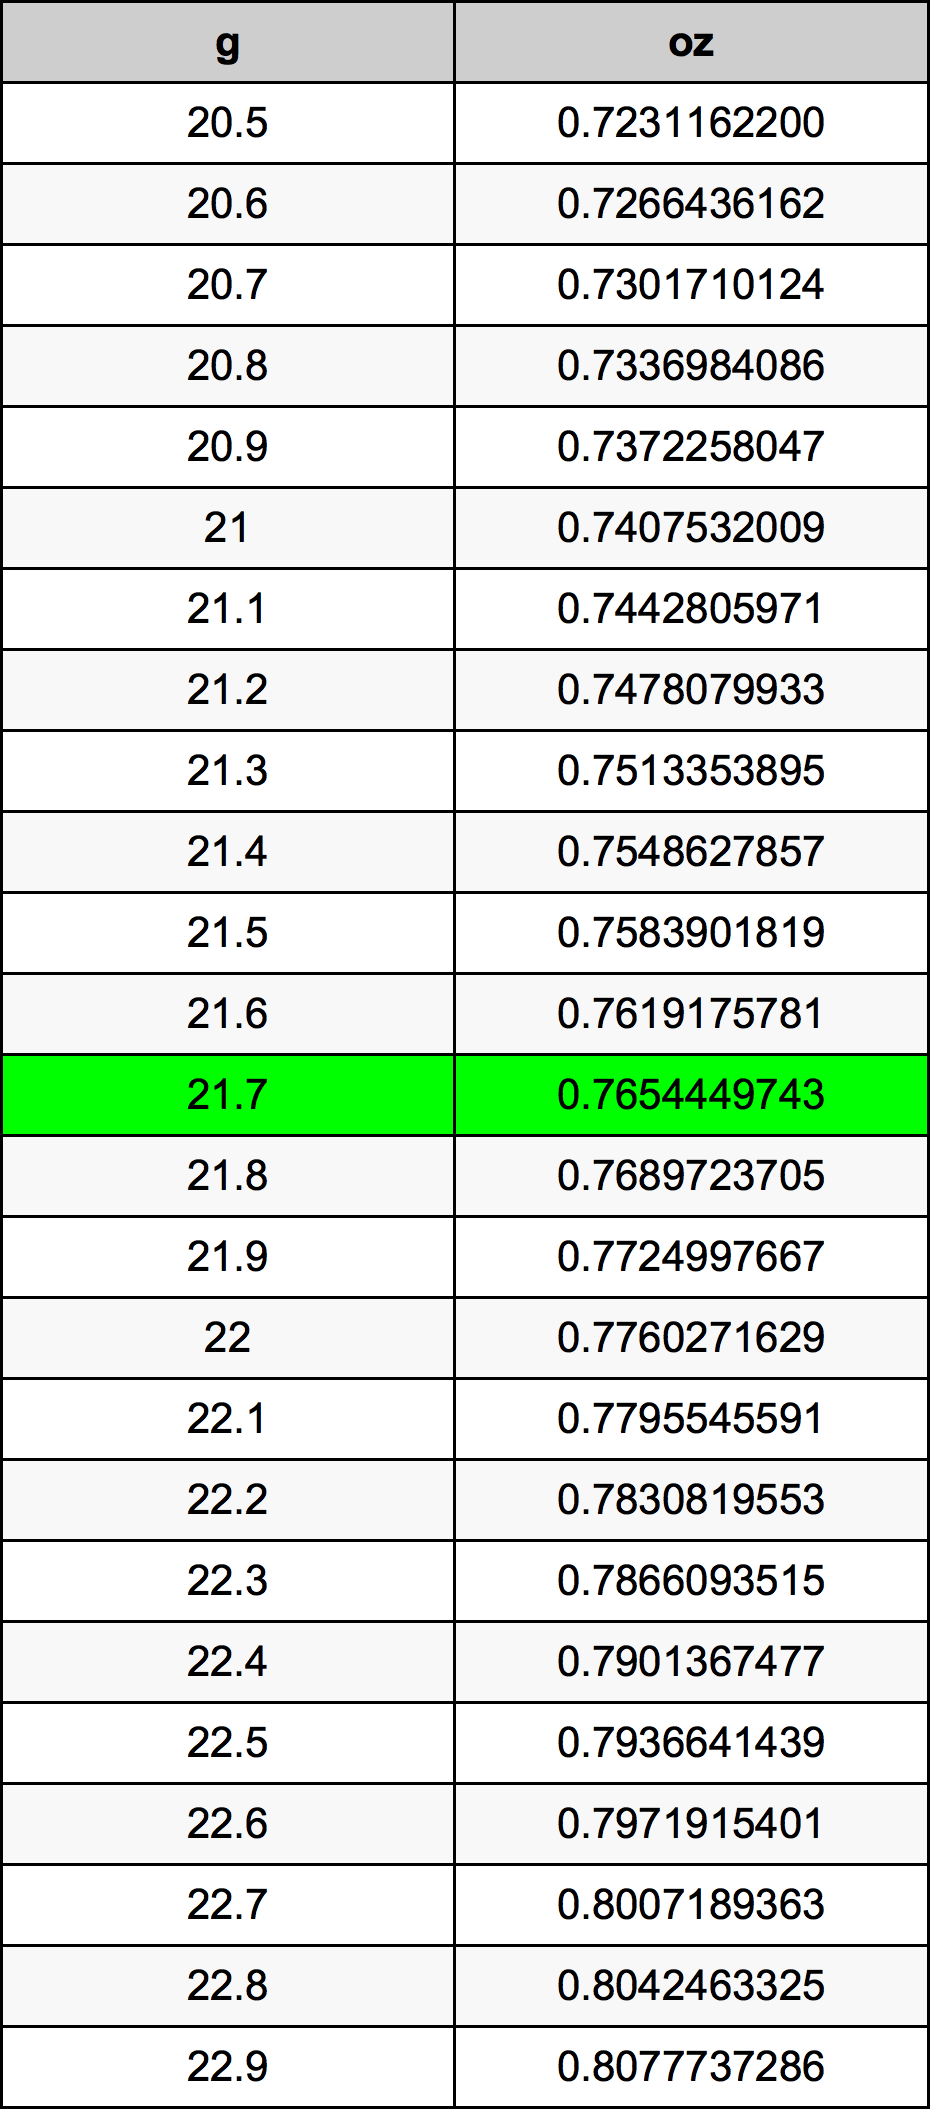 21.7 غرام جدول تحويل